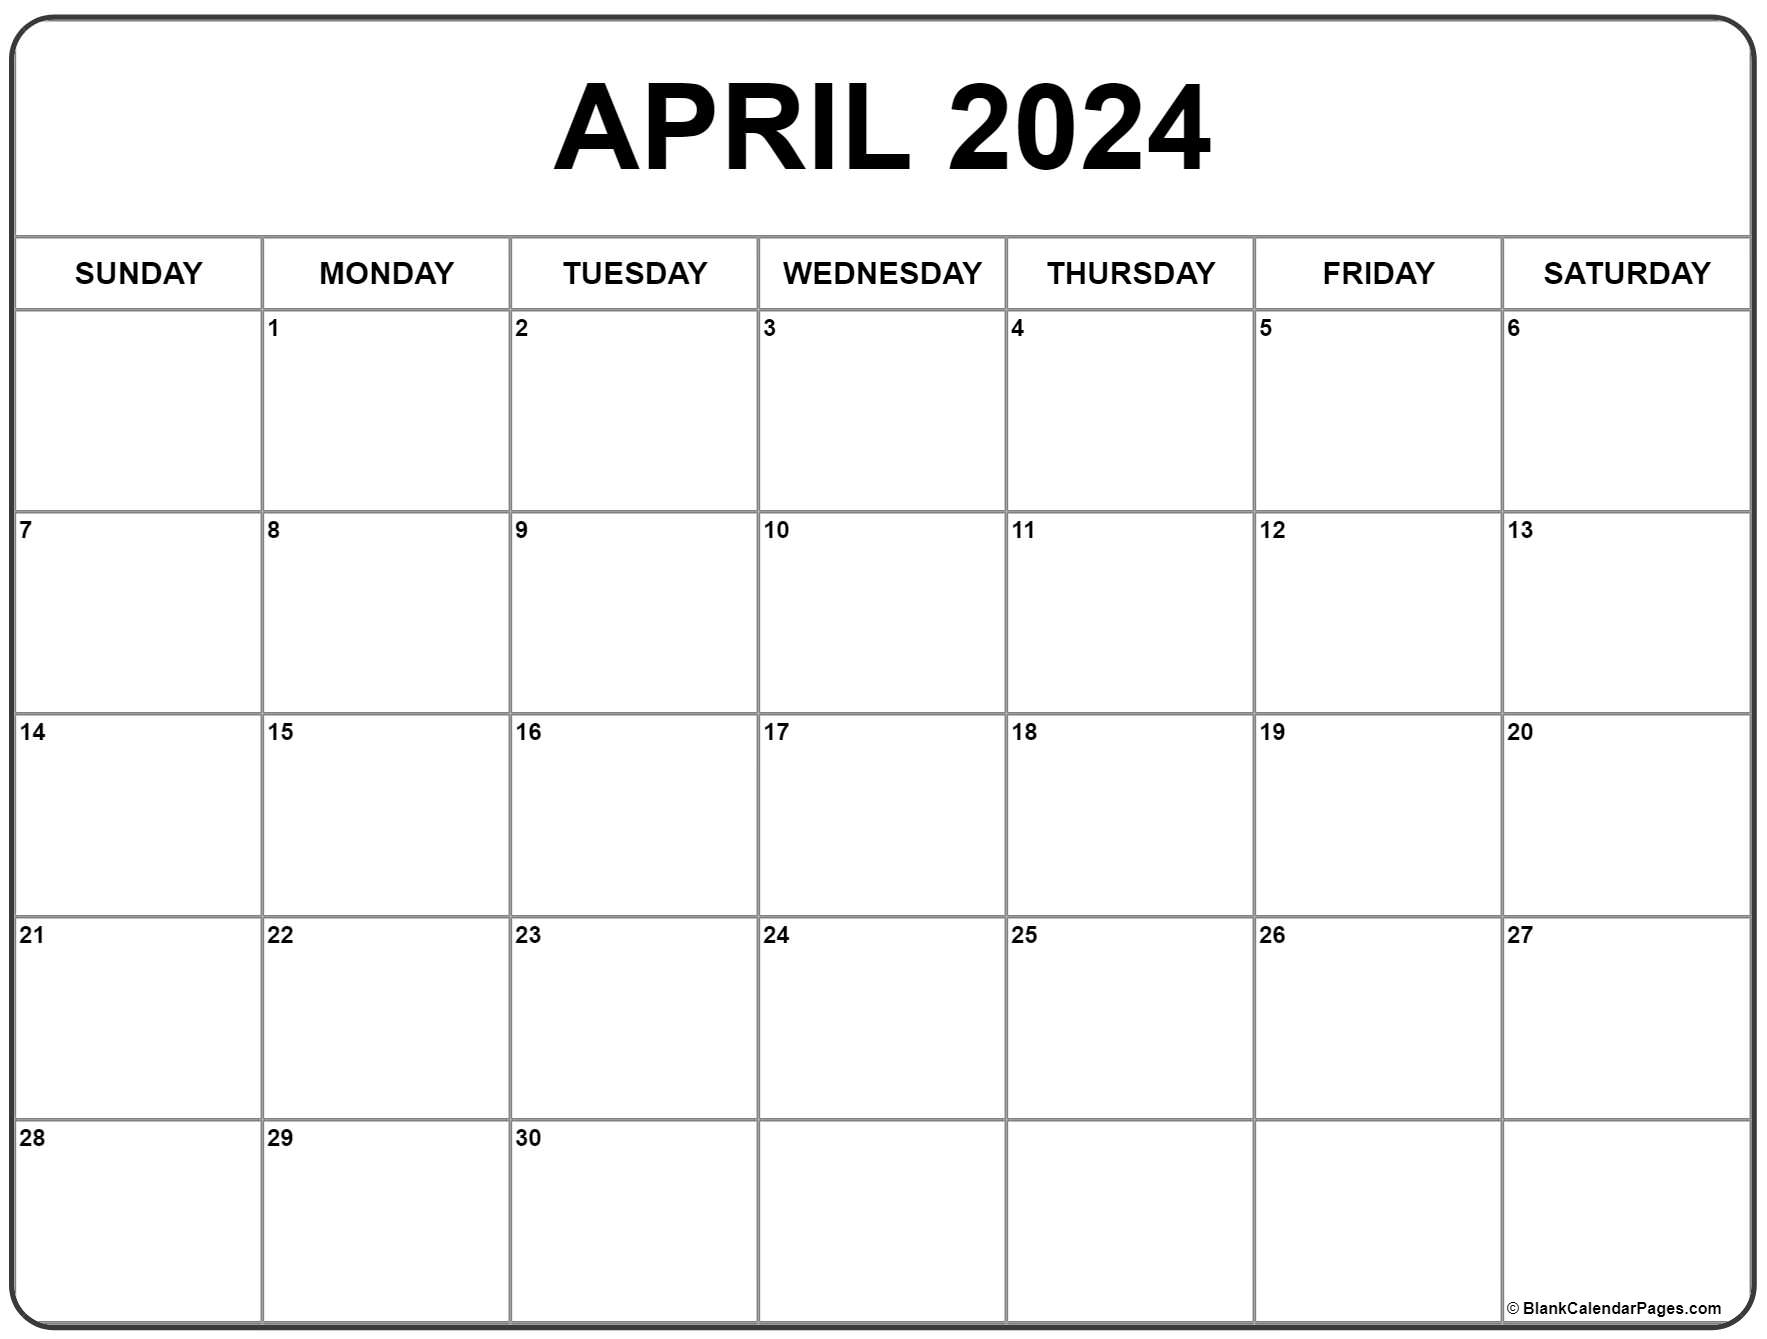 April 2024 Monthly Calendar Printable 99F - Free Printable Calendar April 2024 Pdf